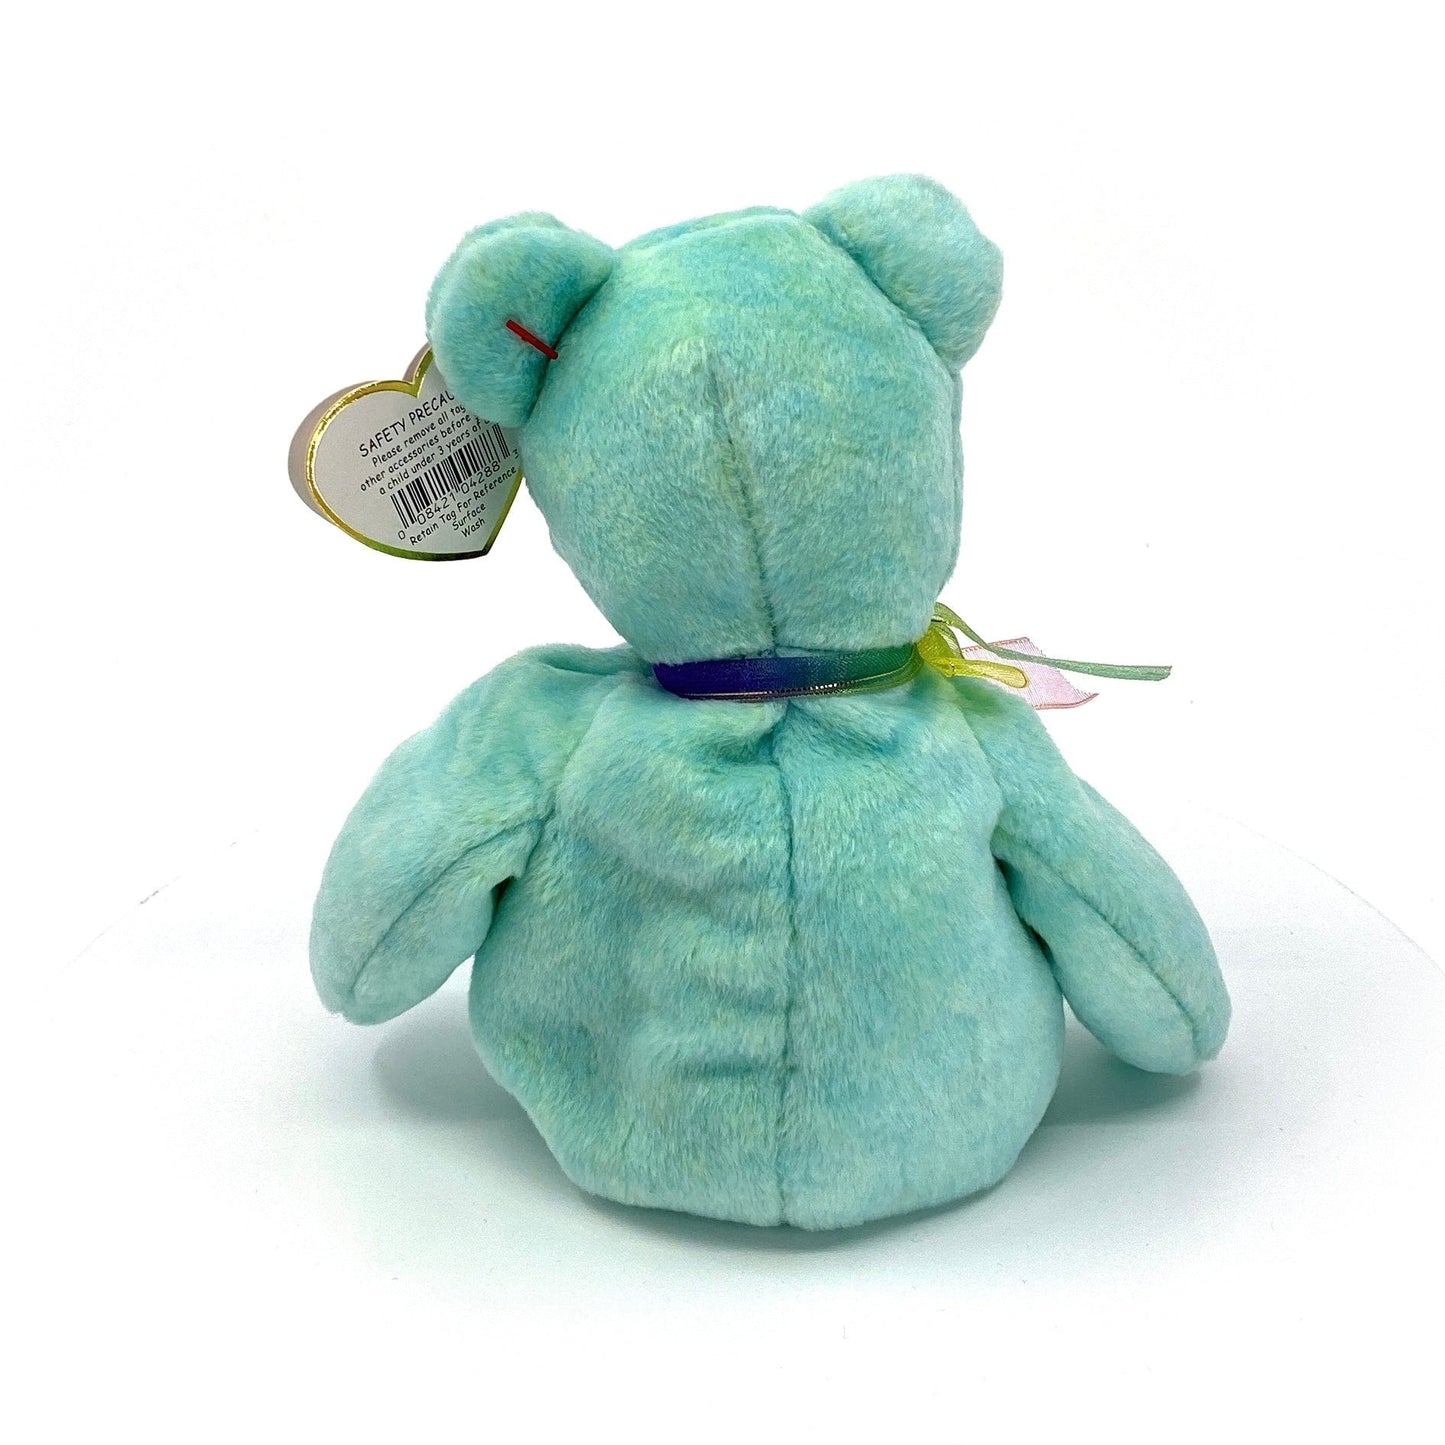 Charming Ty Original Beanie Babies 2000 ‘Ariel’ Bear Plush Toy - Vintage